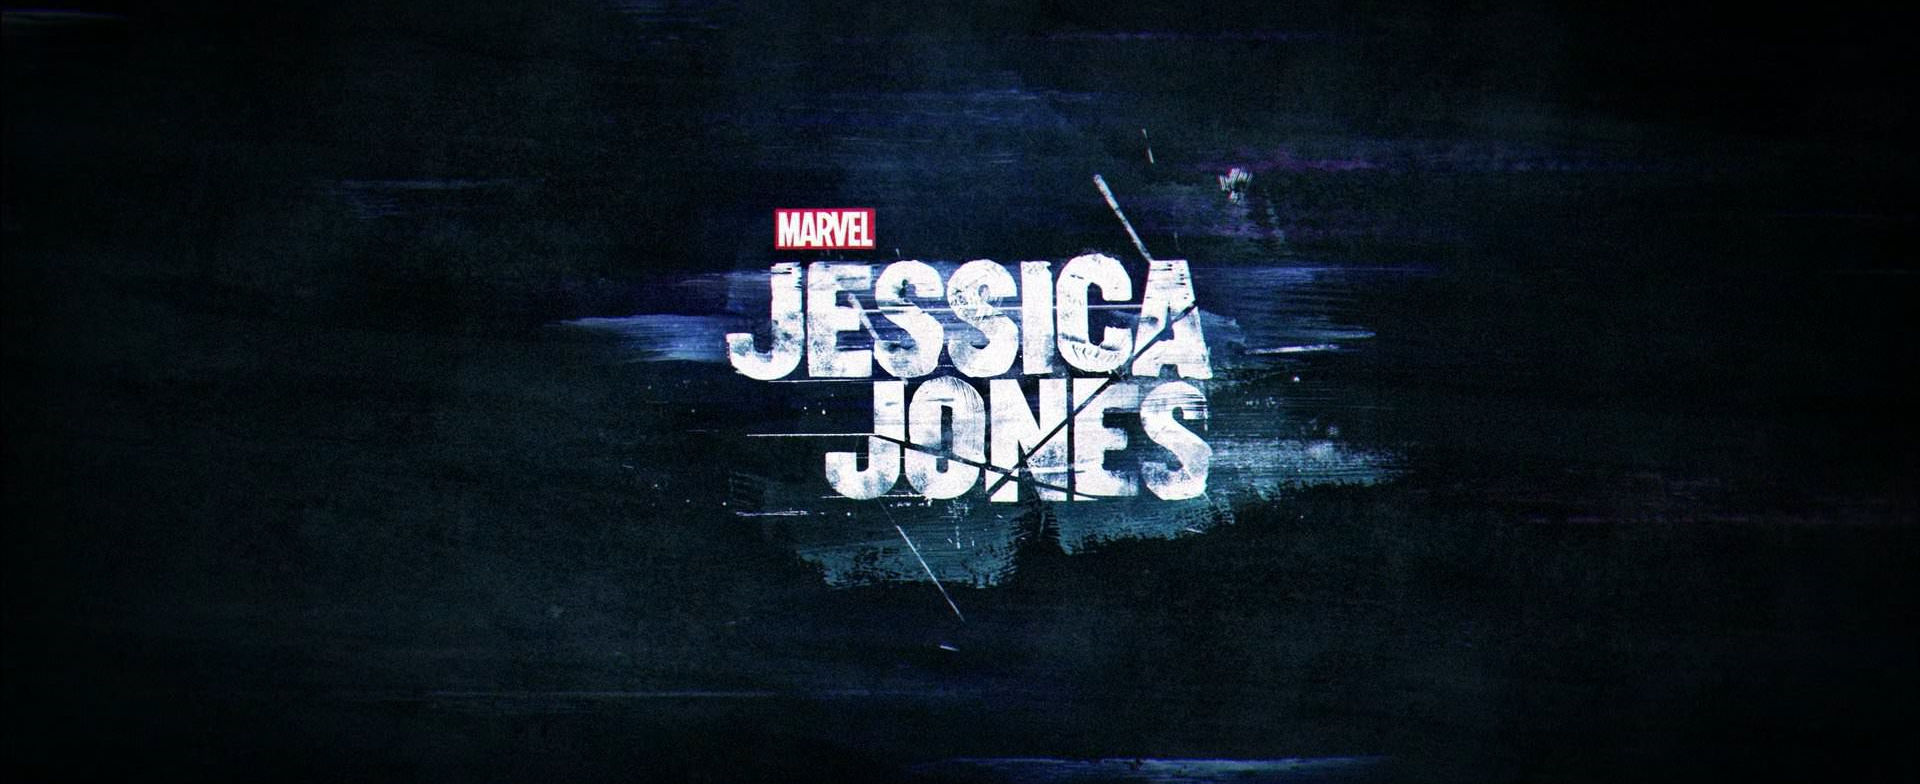 Jessica jones s1 title card